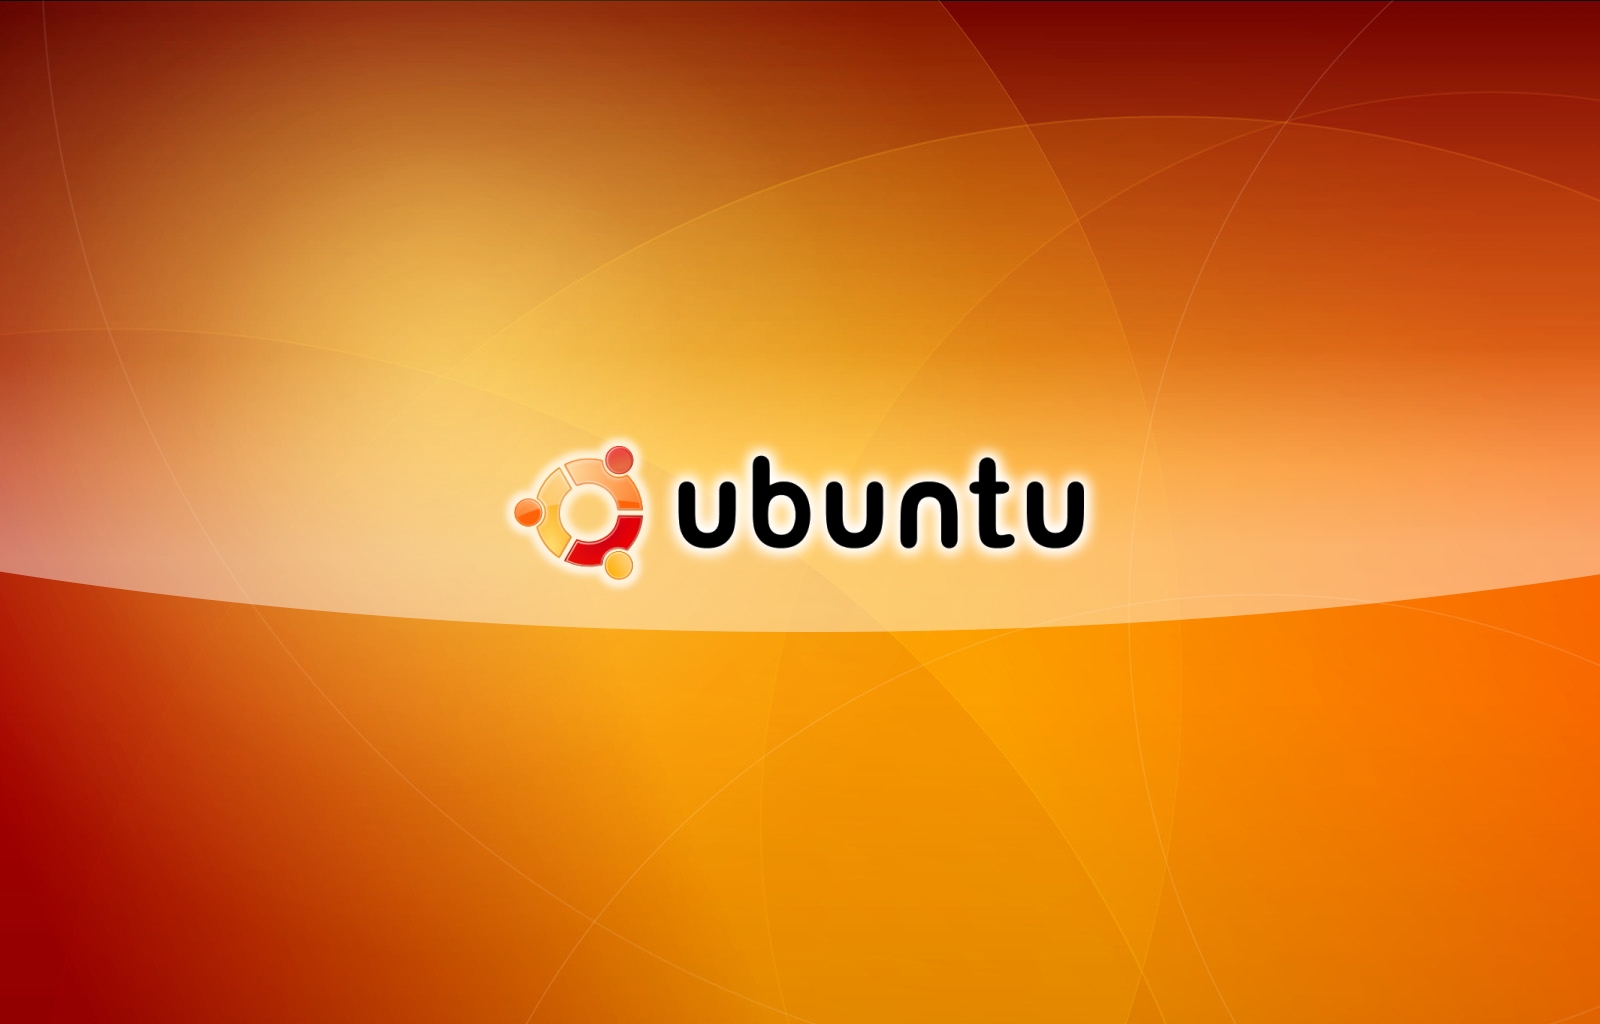 Here's a nice ubuntu wallpapers image to decorate your ubuntu desktop ...